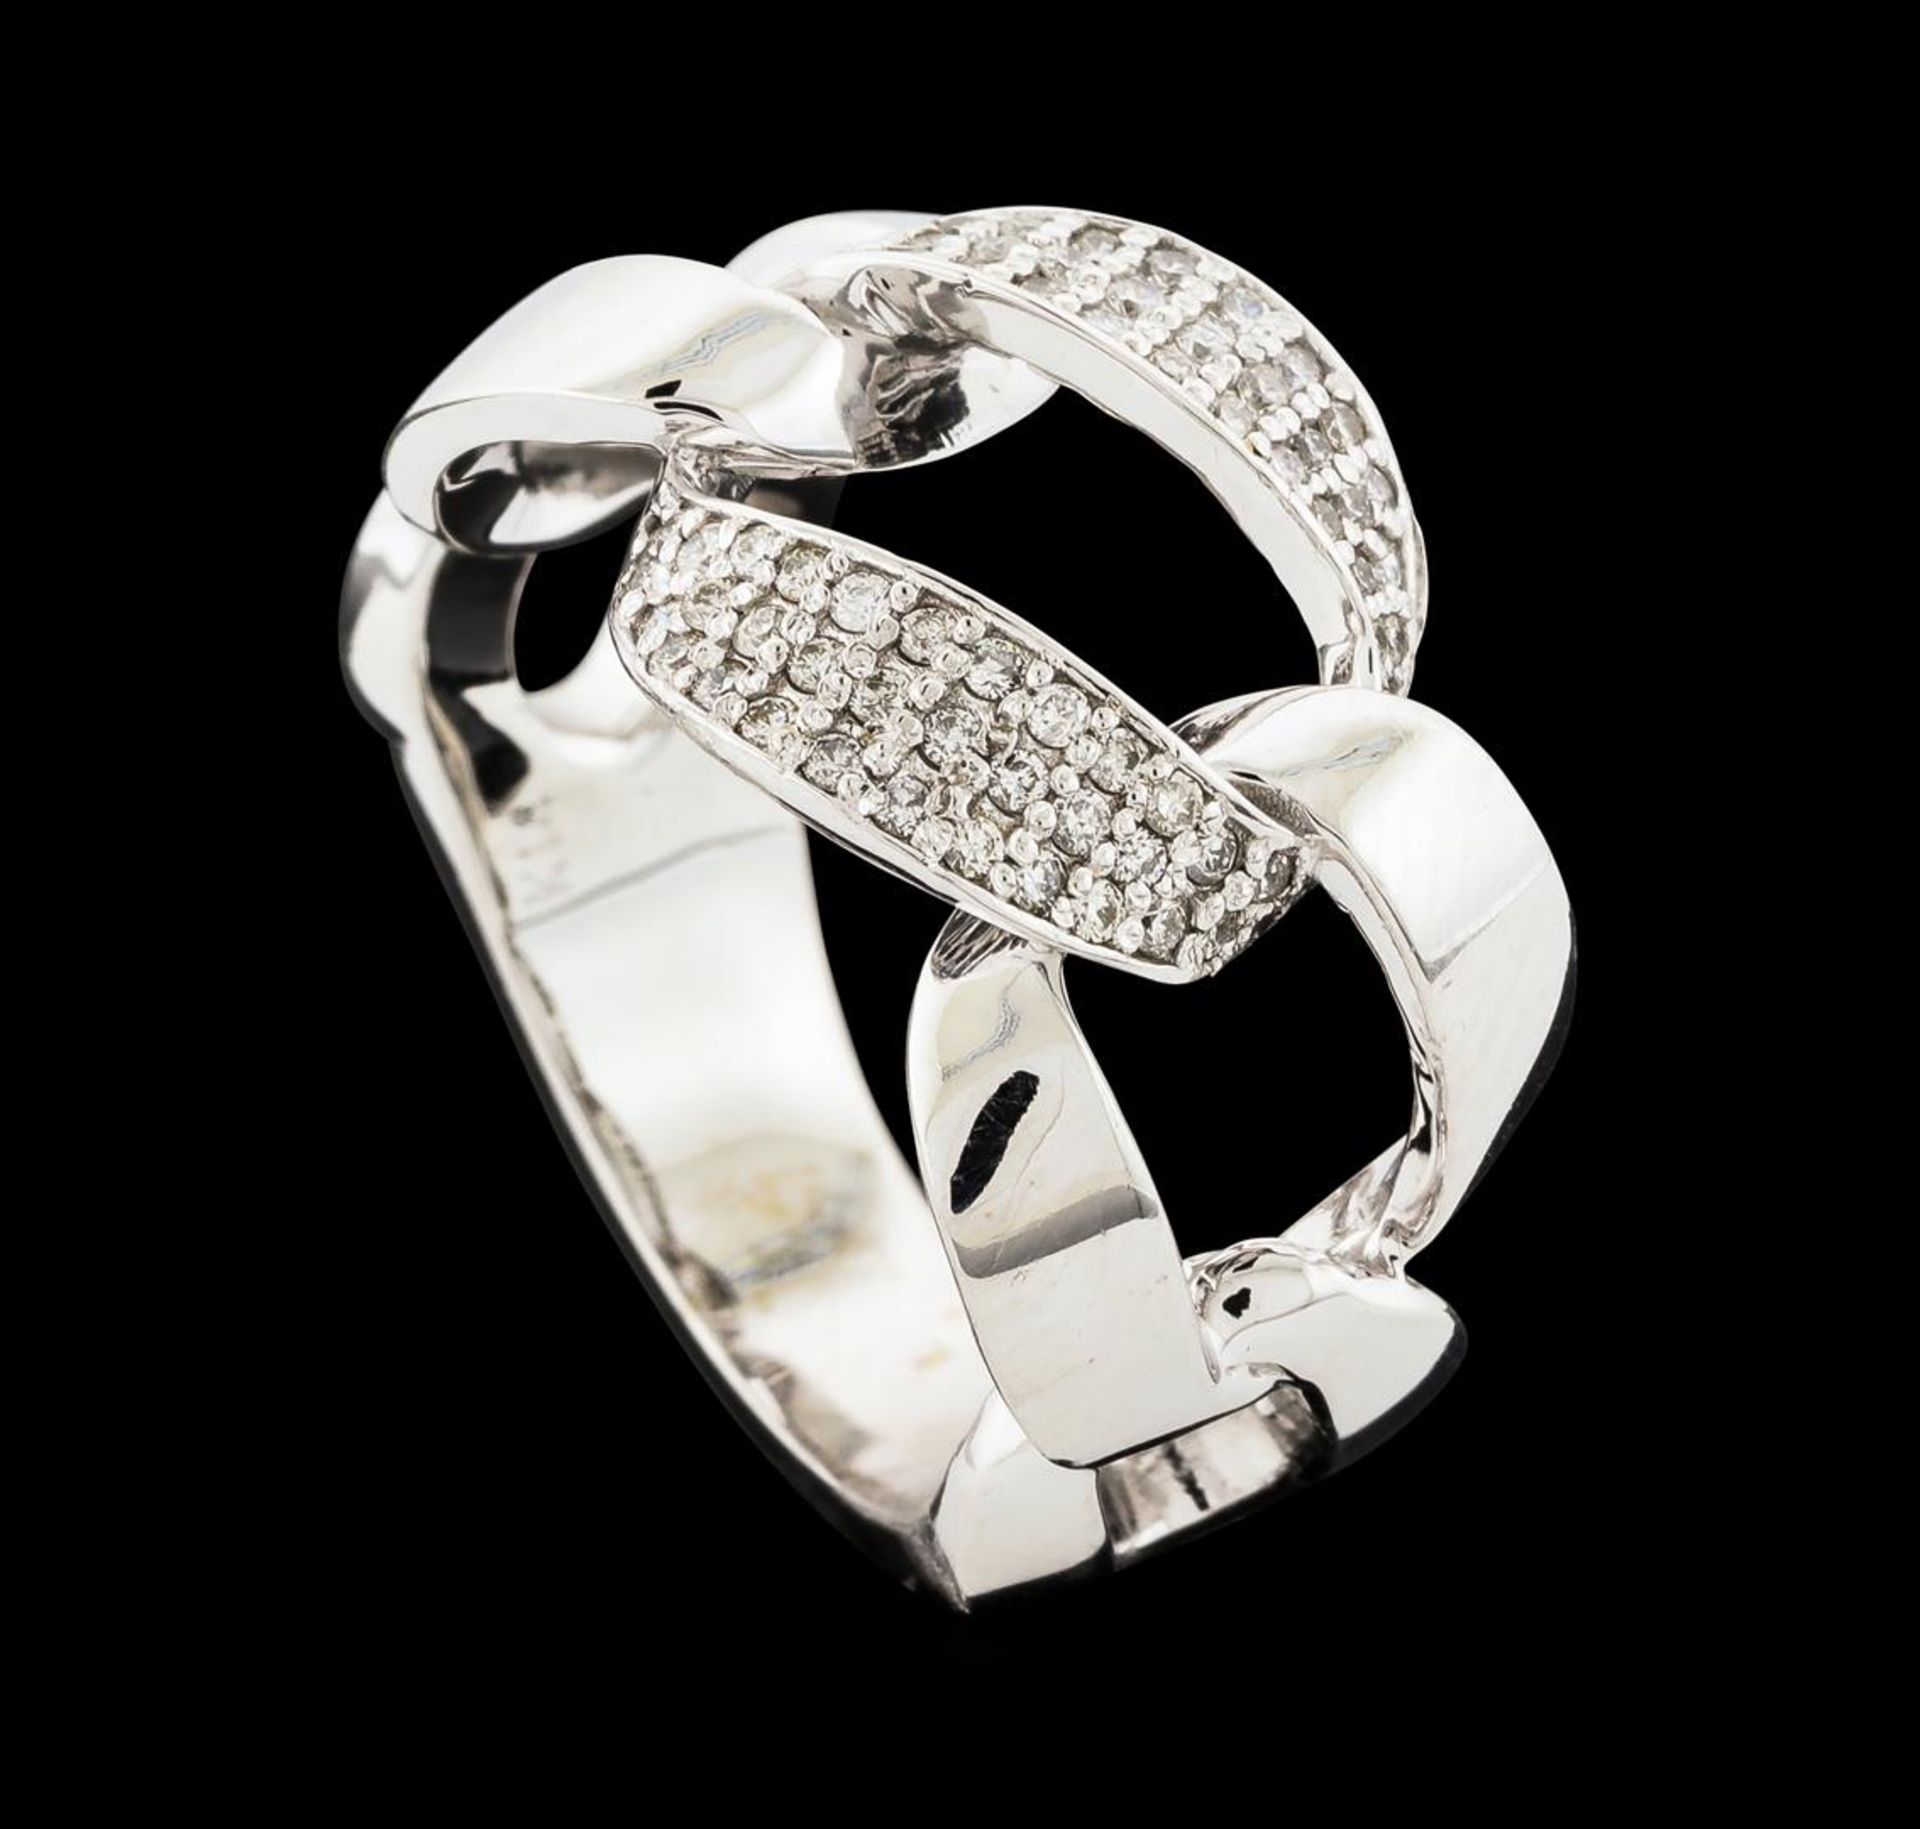 0.33 ctw Diamond Ring - 14KT White Gold - Image 4 of 4